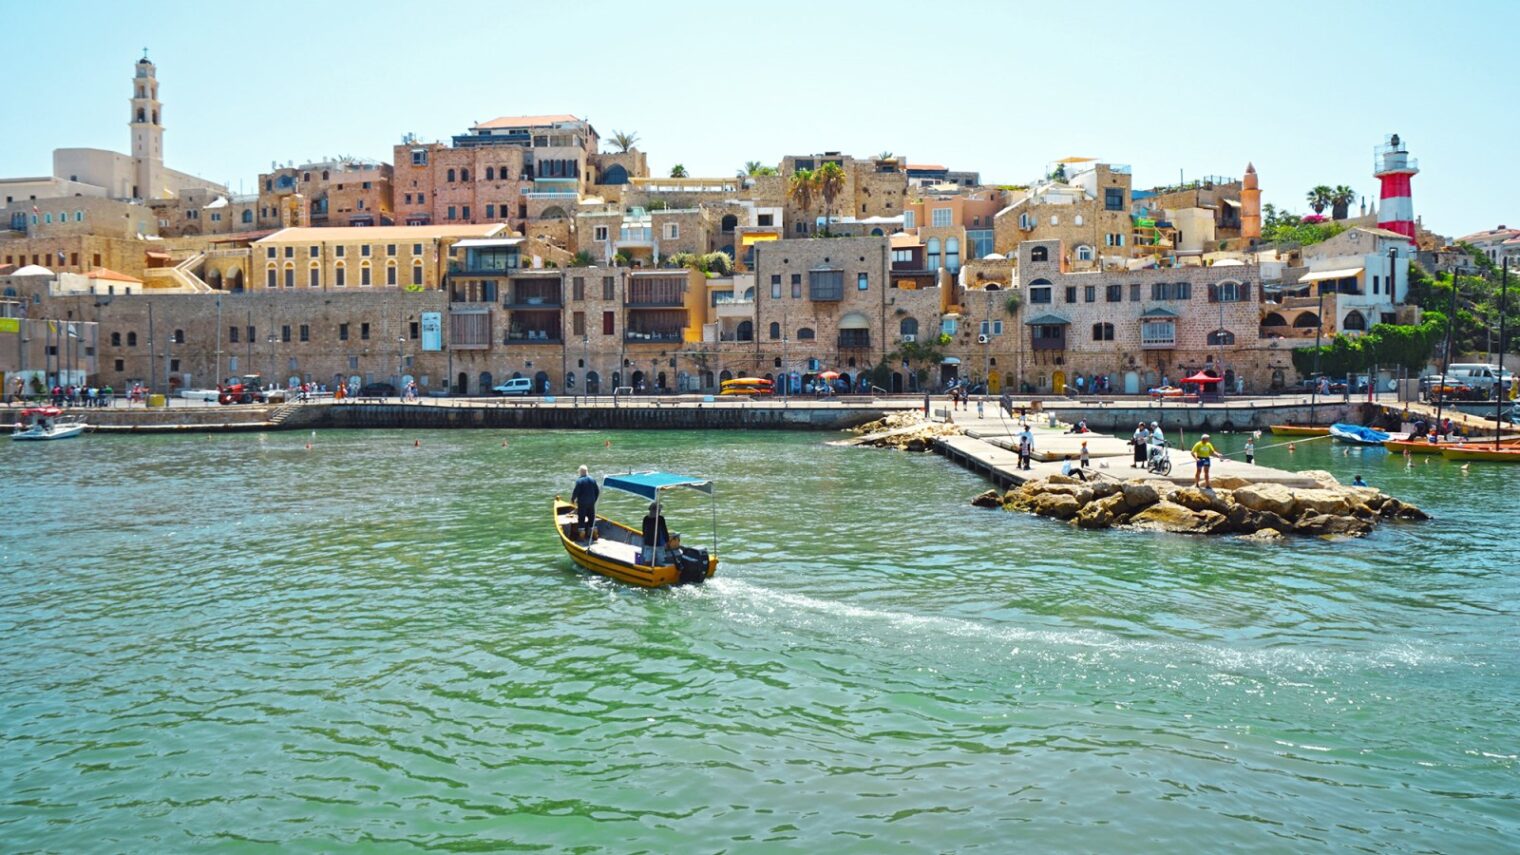 Jaffa Port. Photo by Ido Biran